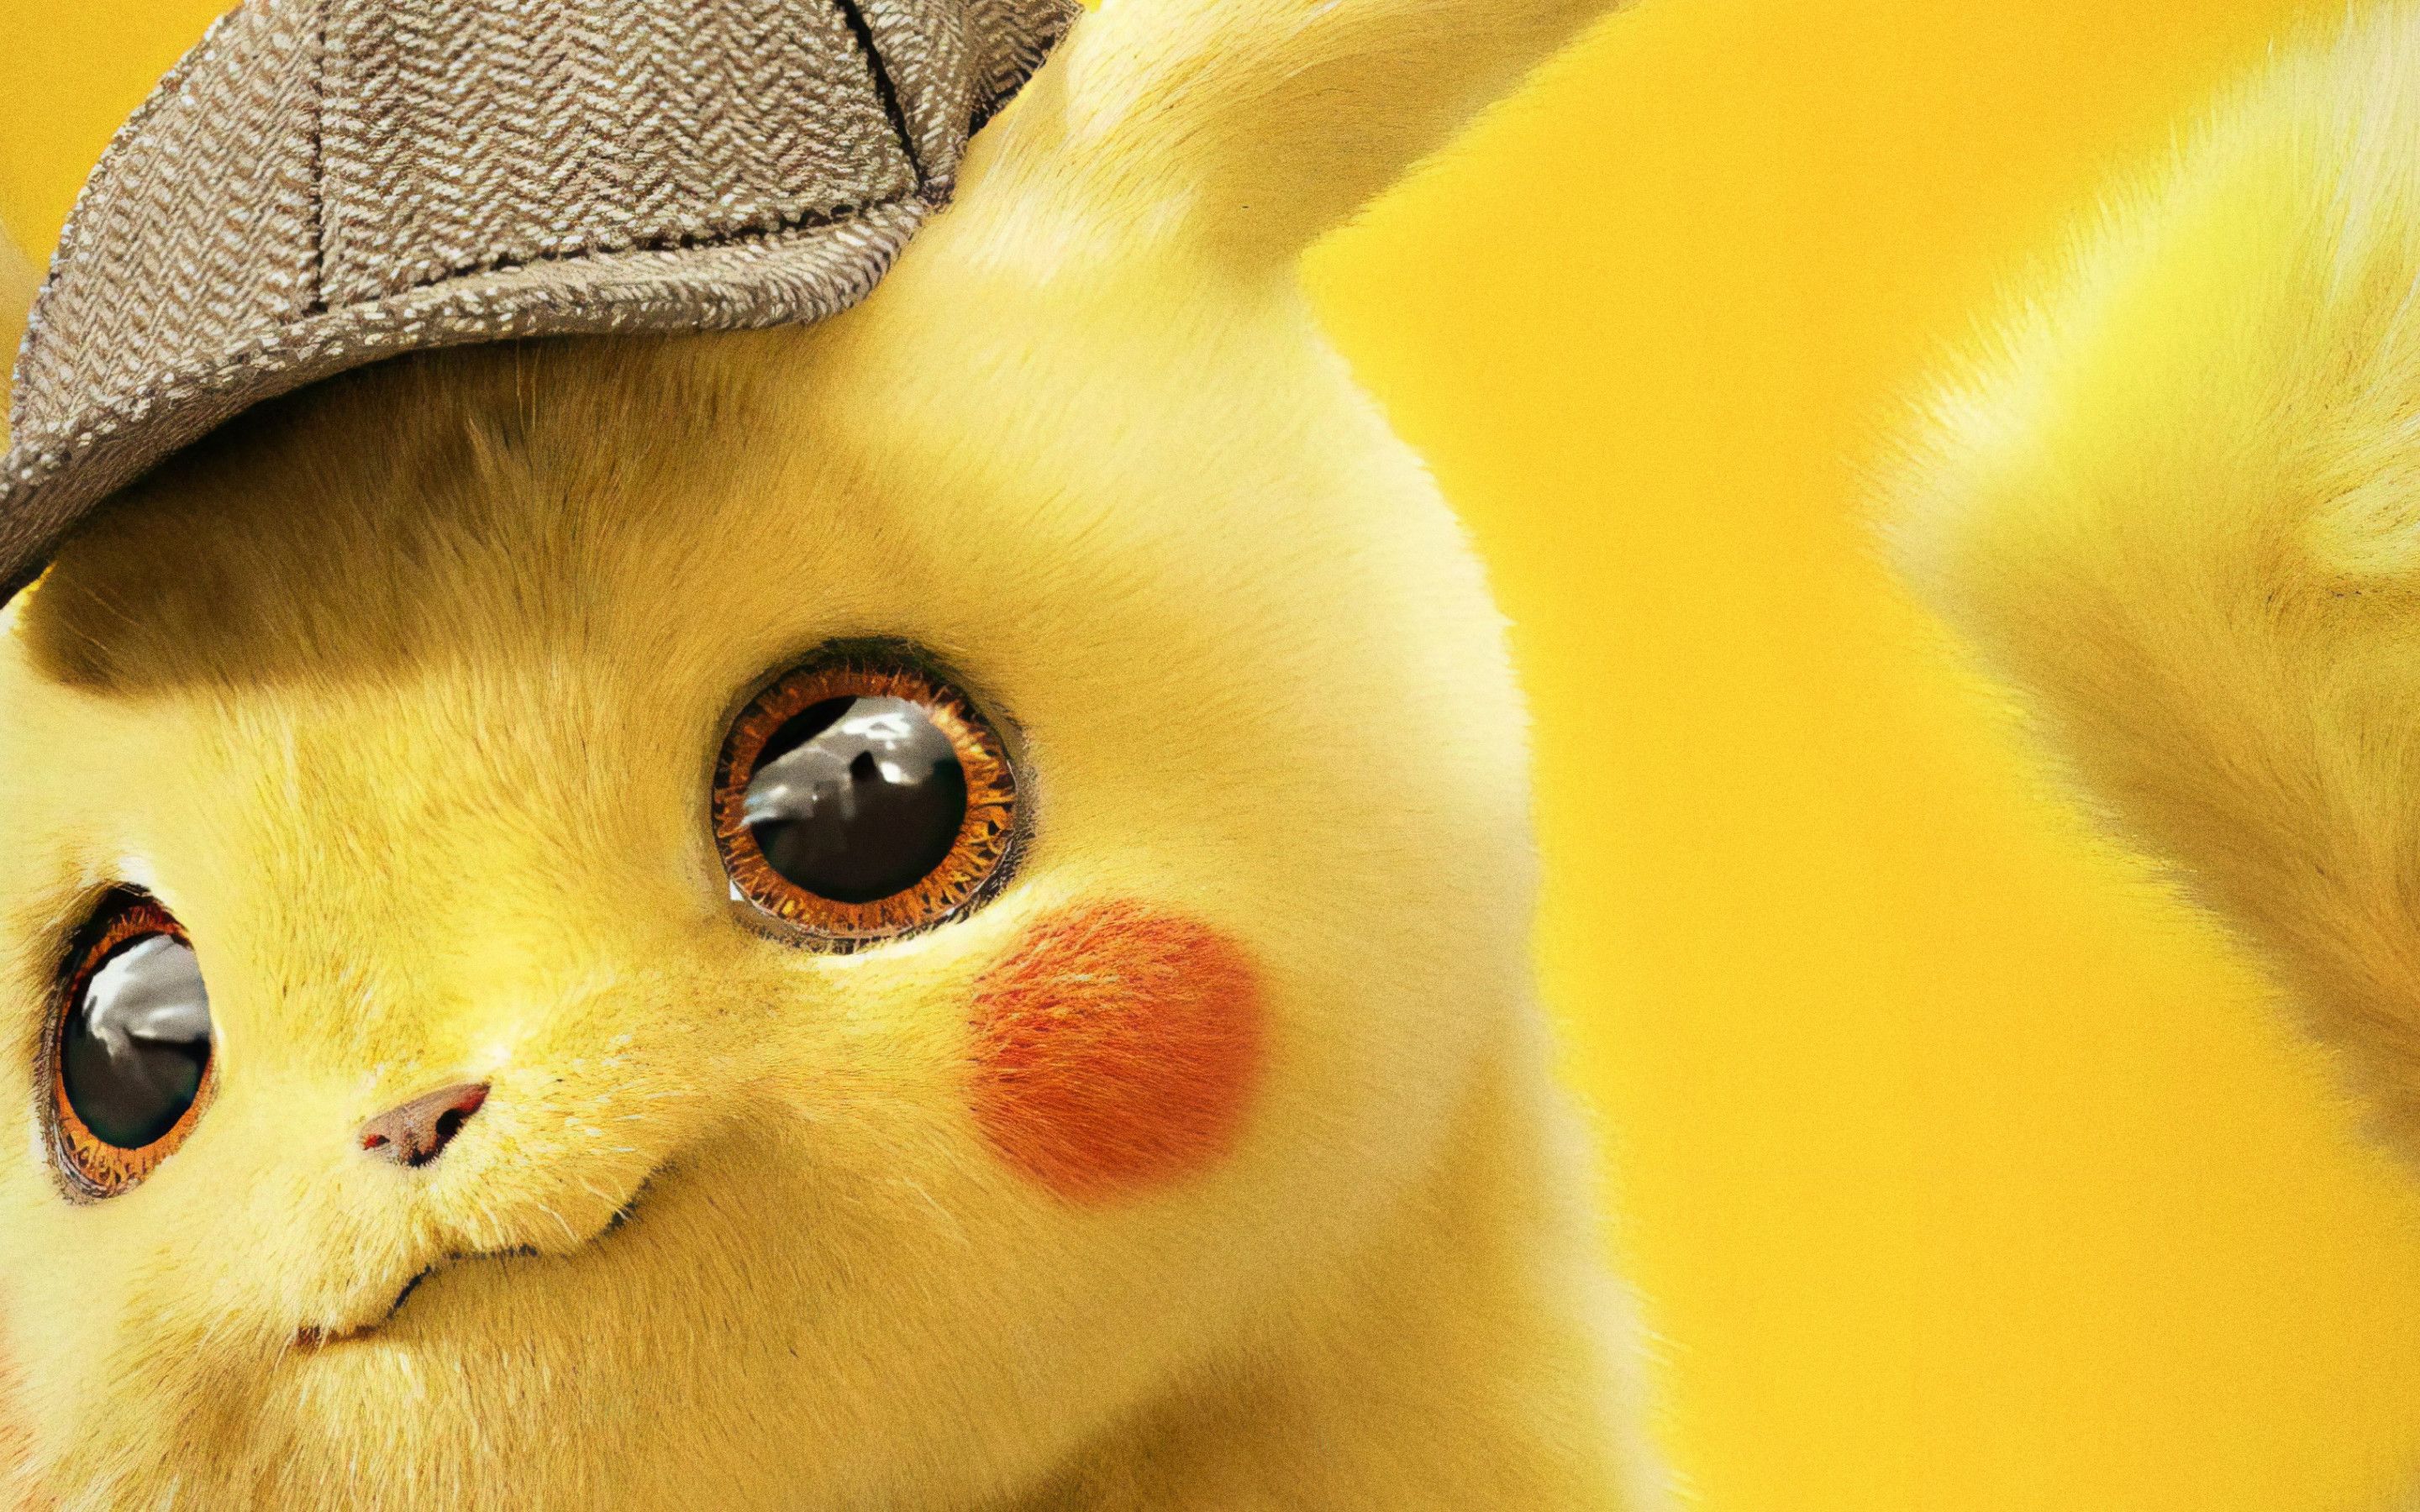 Pokemon Detective Pikachu 4k 2019 Macbook Pro Retina HD 4k Wallpaper, Image, Background, Photo and Picture